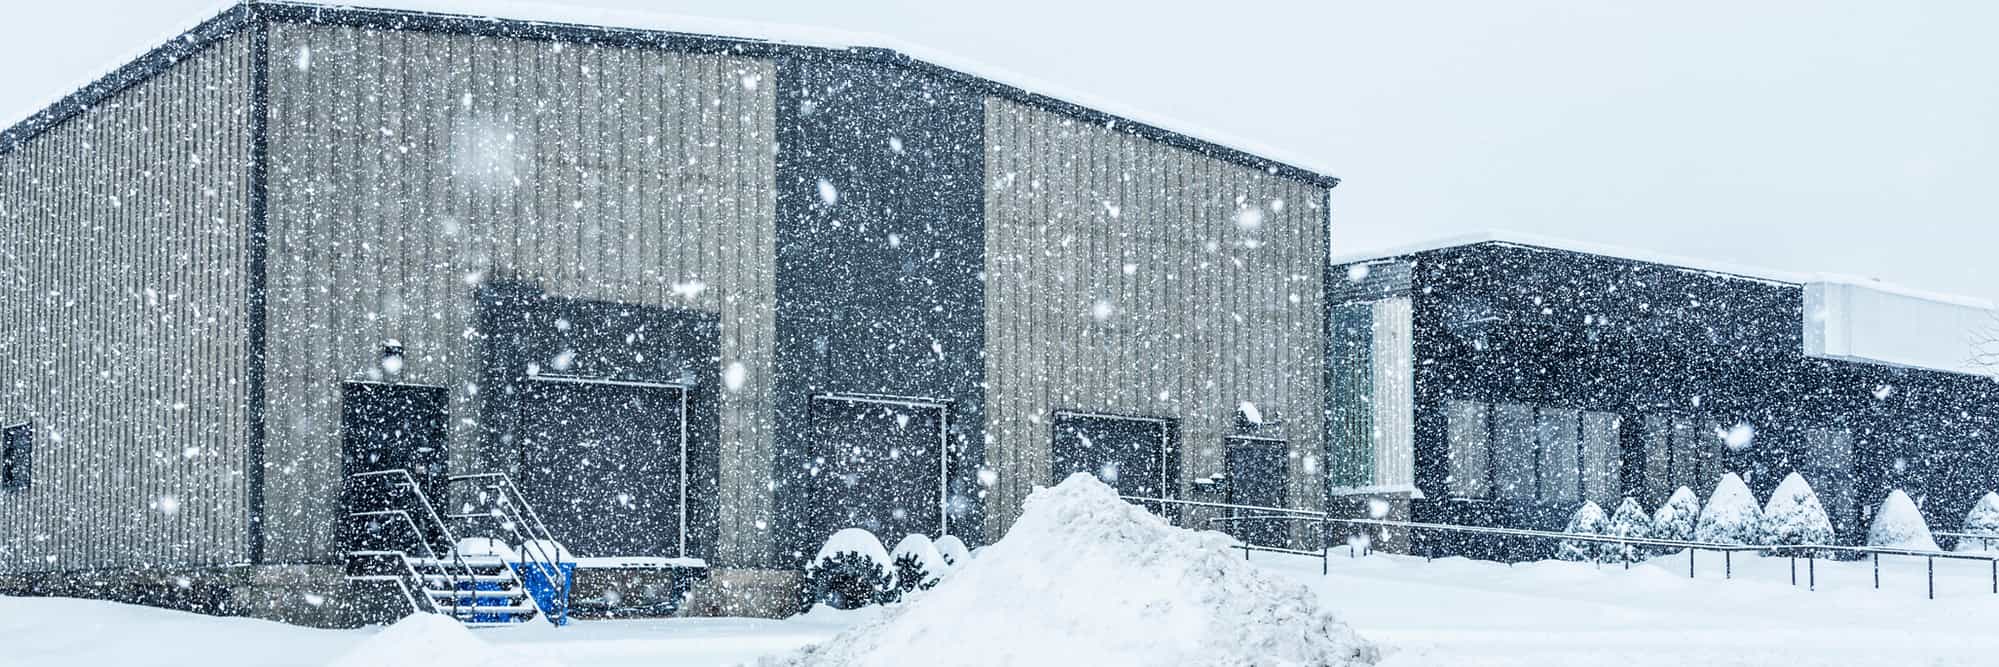 Blizzard Warehouse